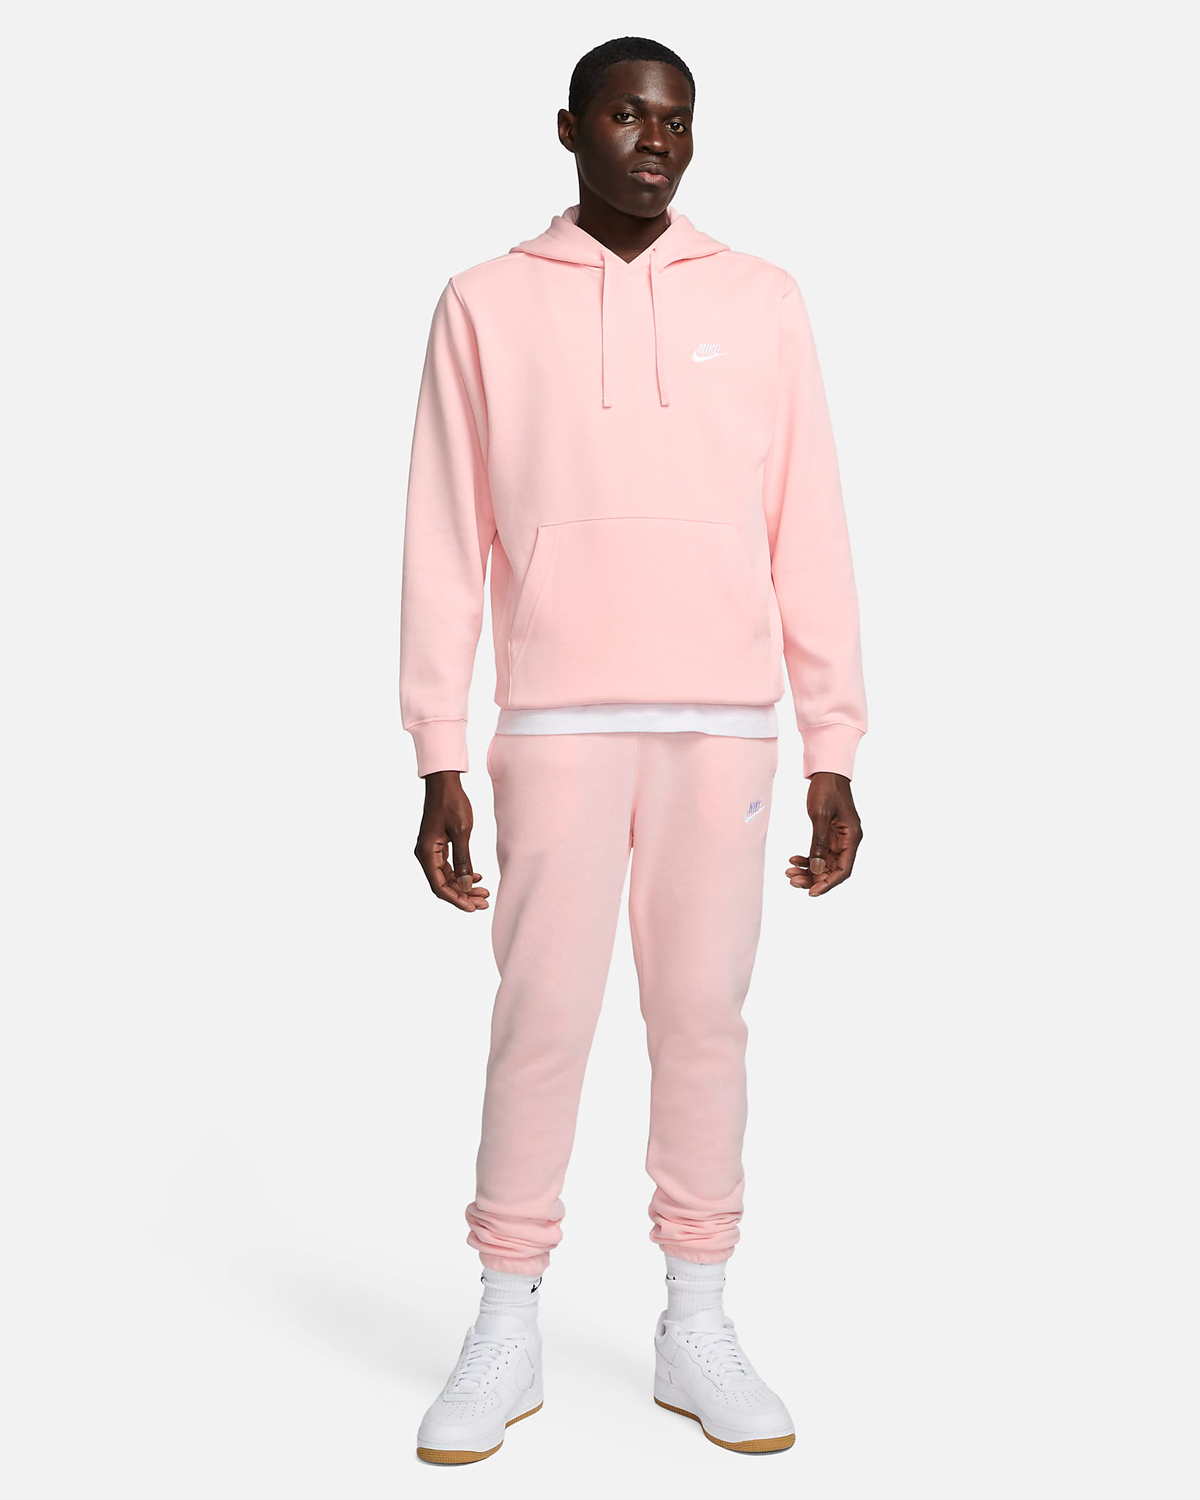 Nike-Sportswear-Pink-Bloom-Clothing